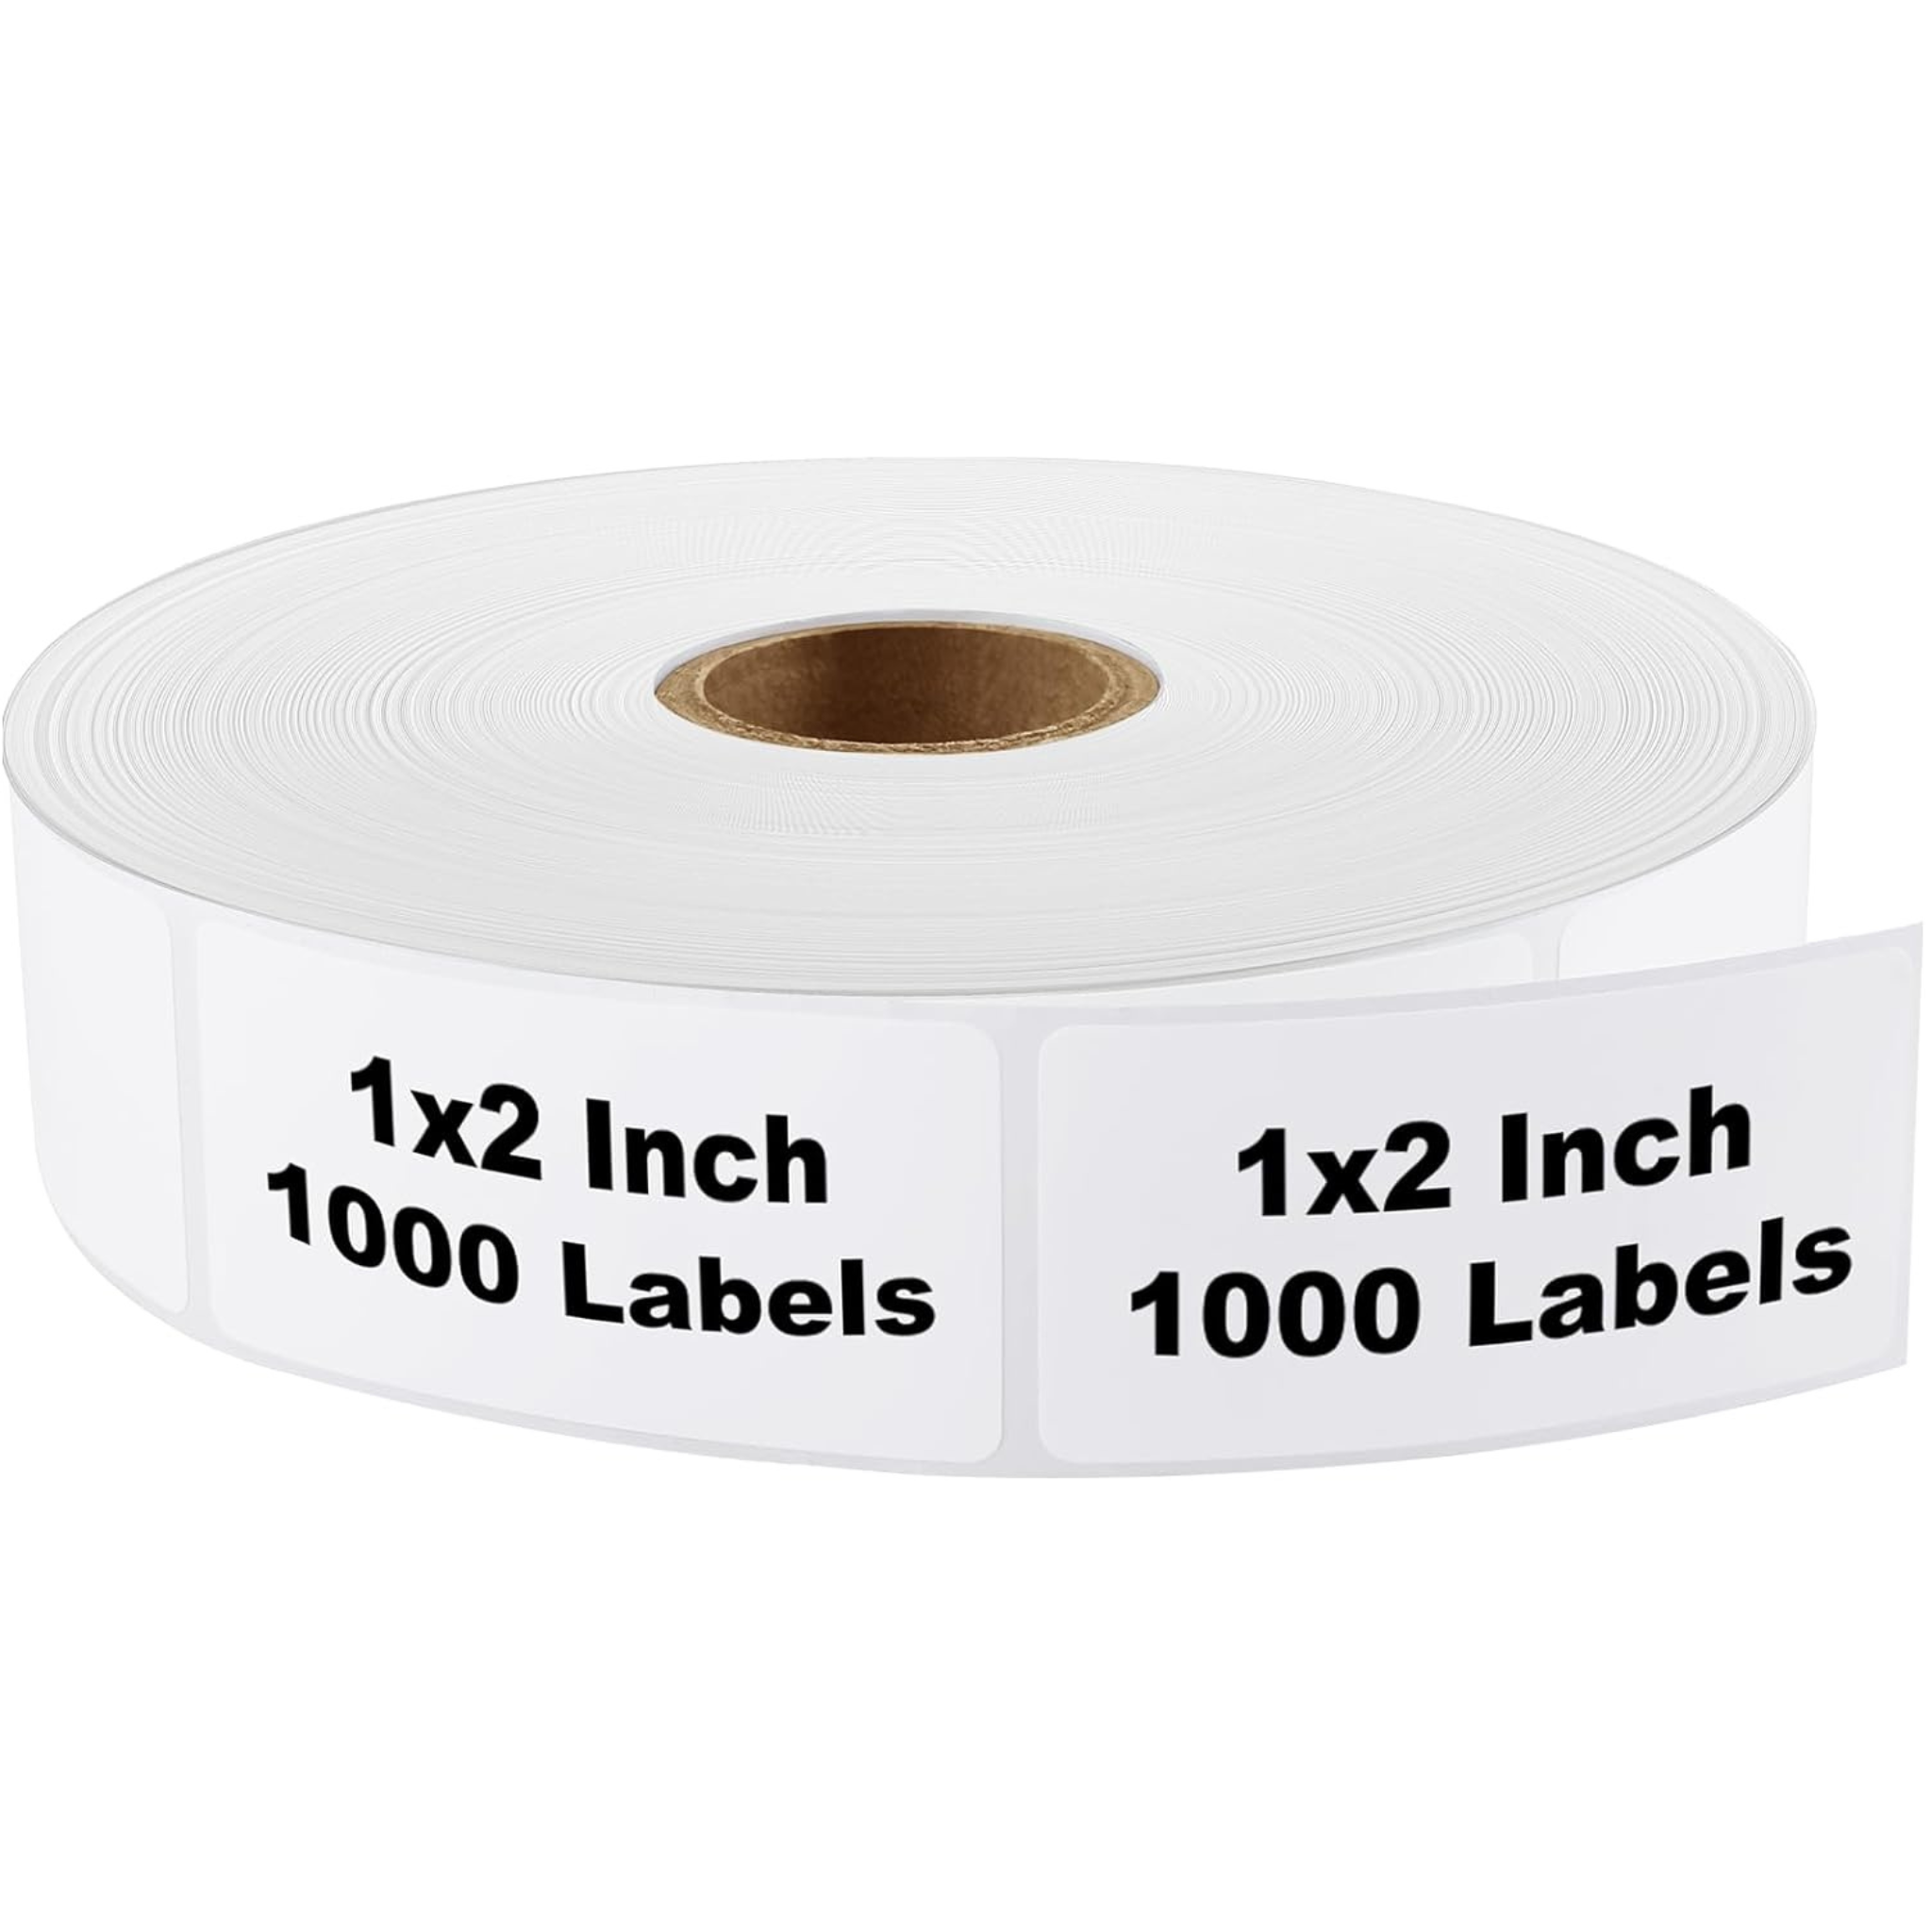 1000 Removable Freezer Labels